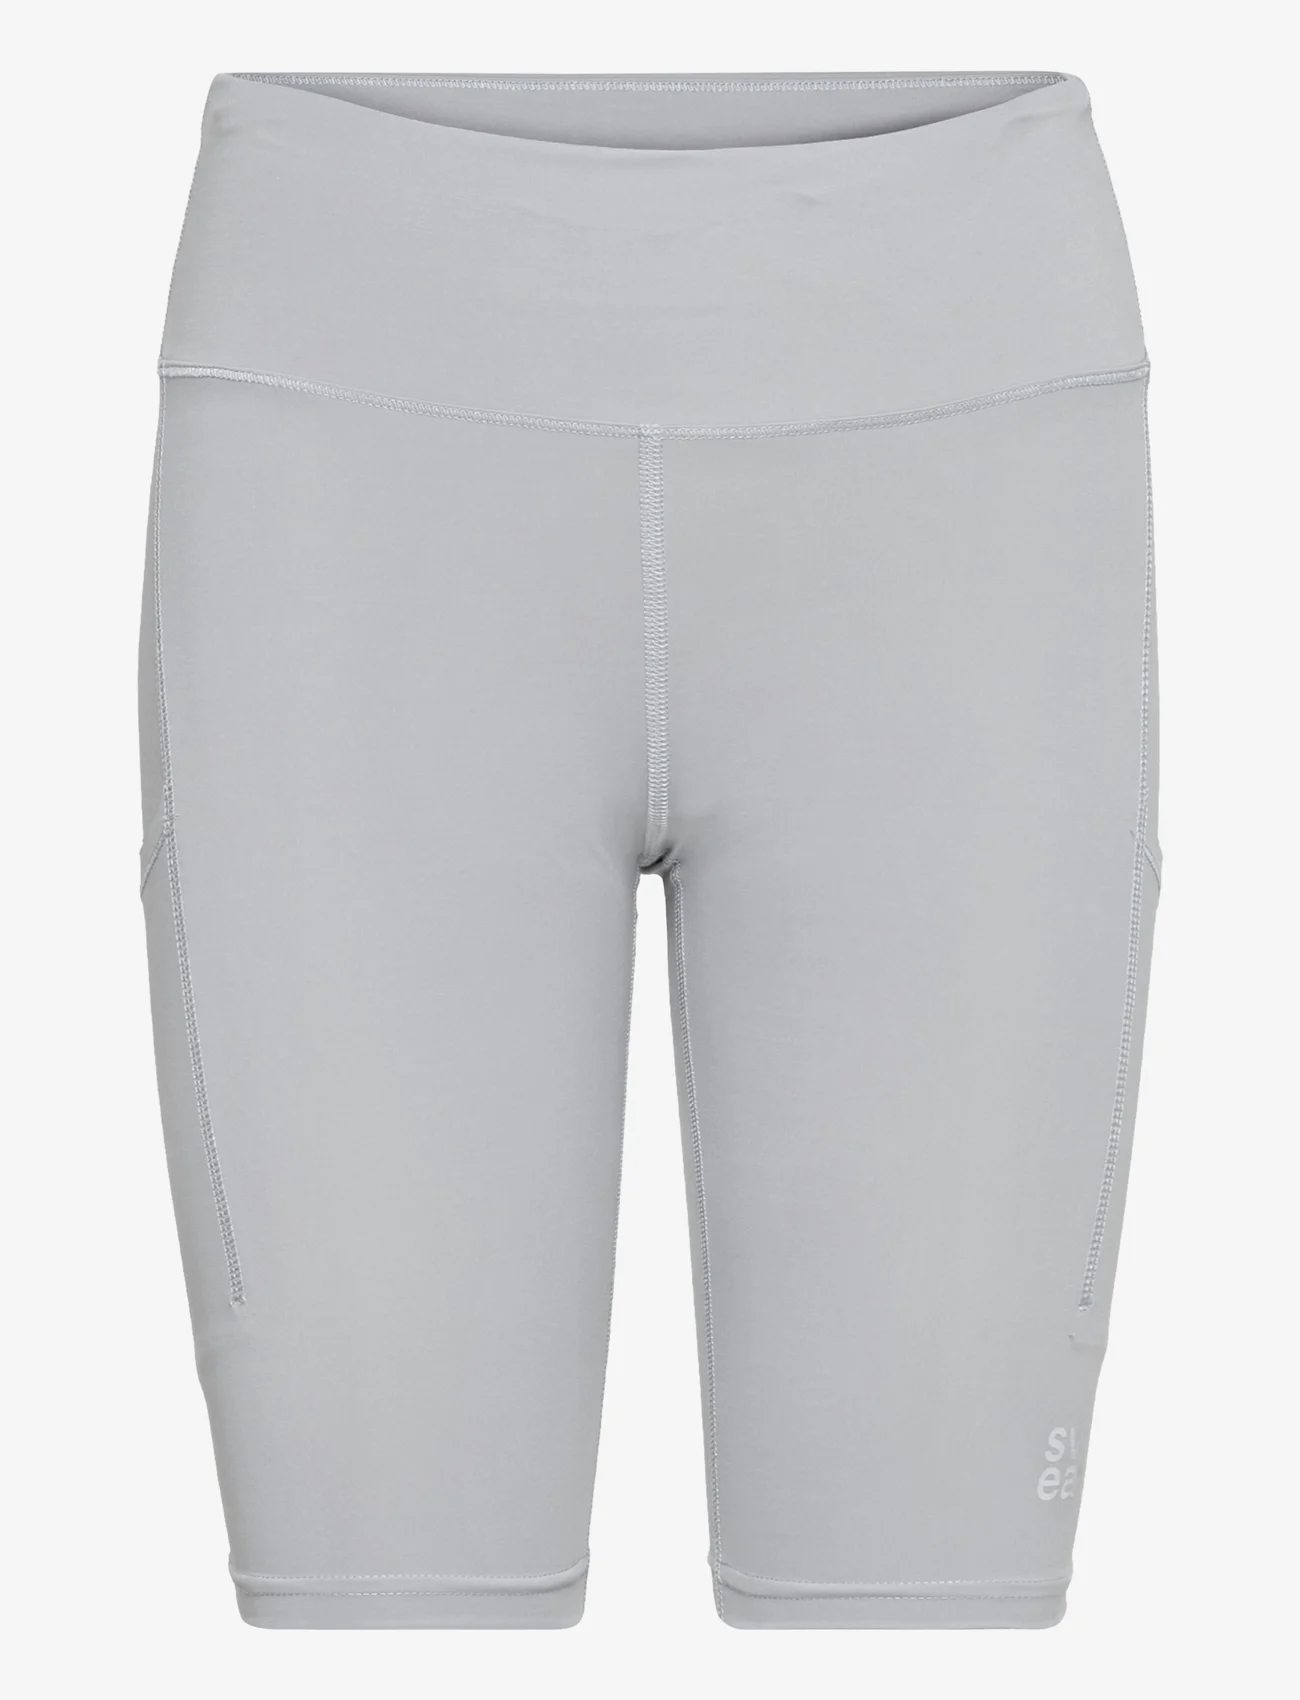 Svea - W. Sporty Seam Shorts - cycling shorts - light grey - 0